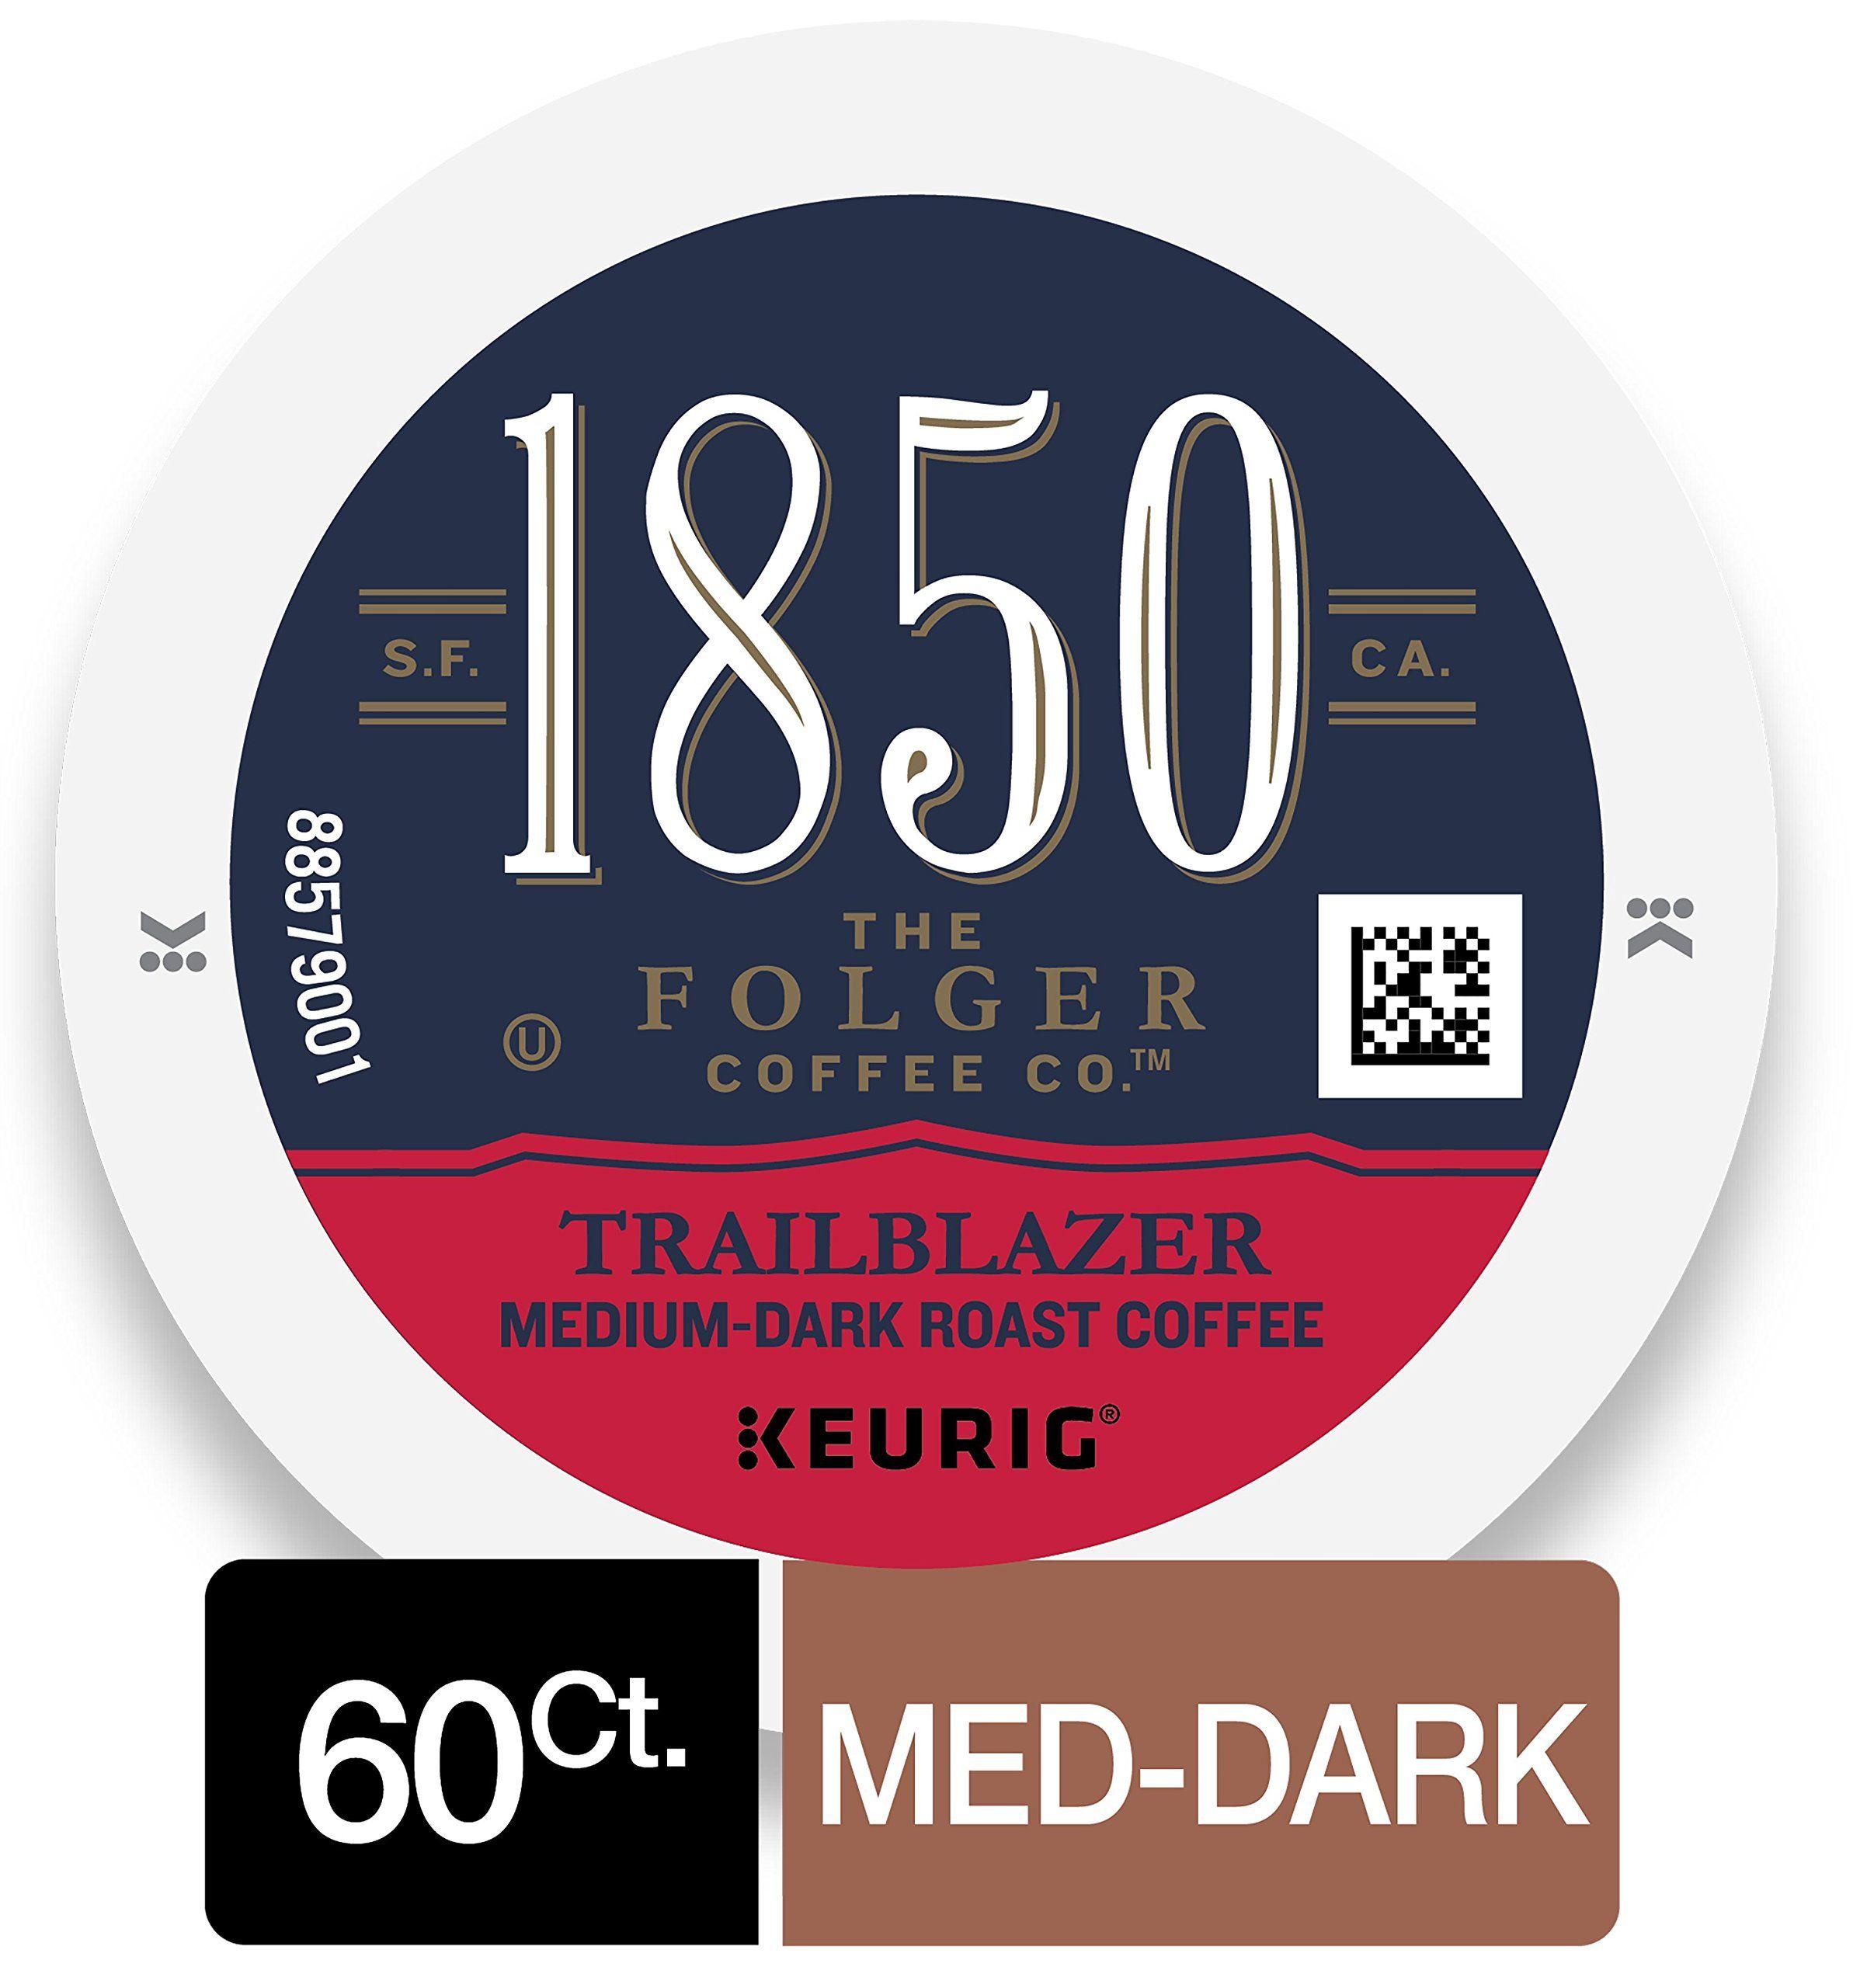 Dark Roast Coffee Brands Logo - Amazon.com : 1850 Black Gold, Dark Roast Coffee, K-Cup Pods for ...